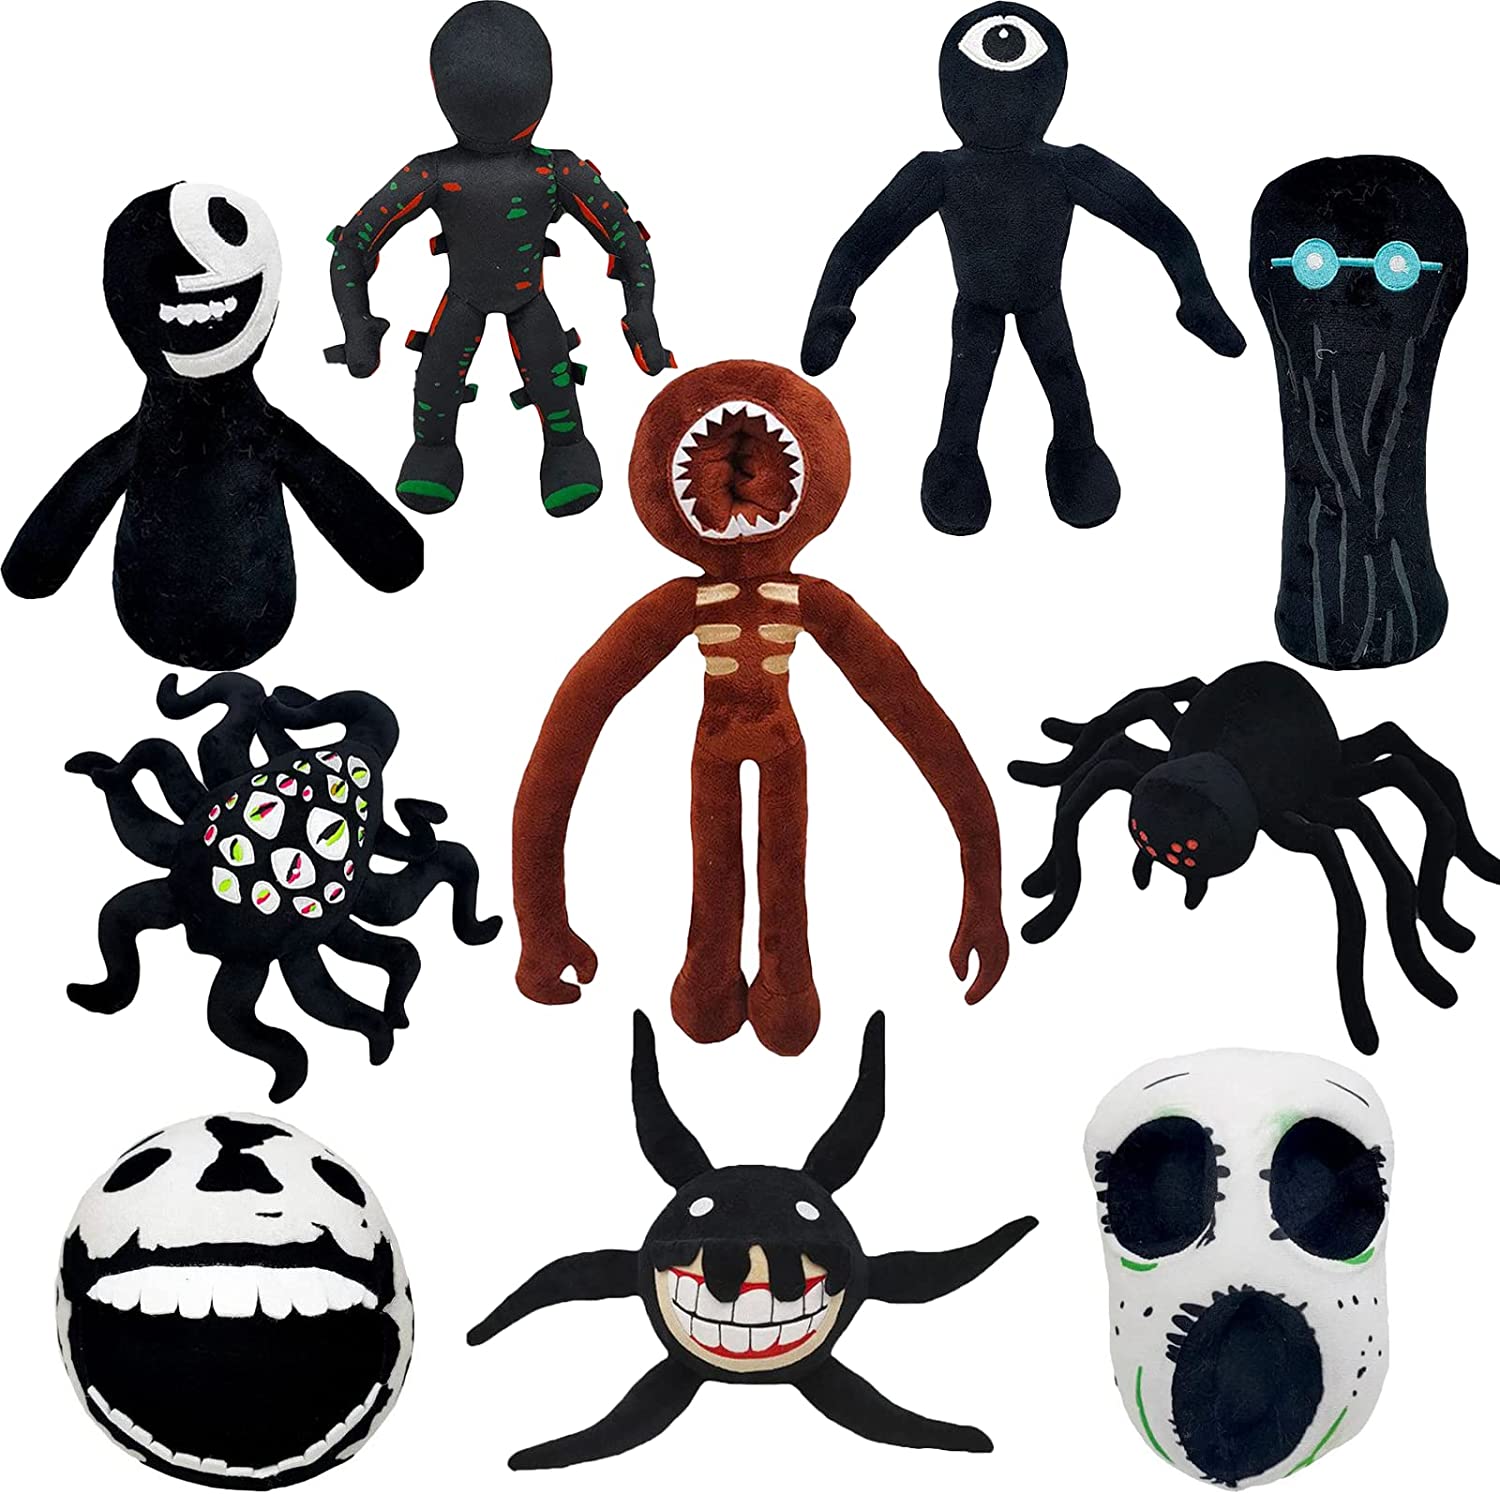 Doors Plush Toys, Monster Horror Game Plush, Stuffed Animals